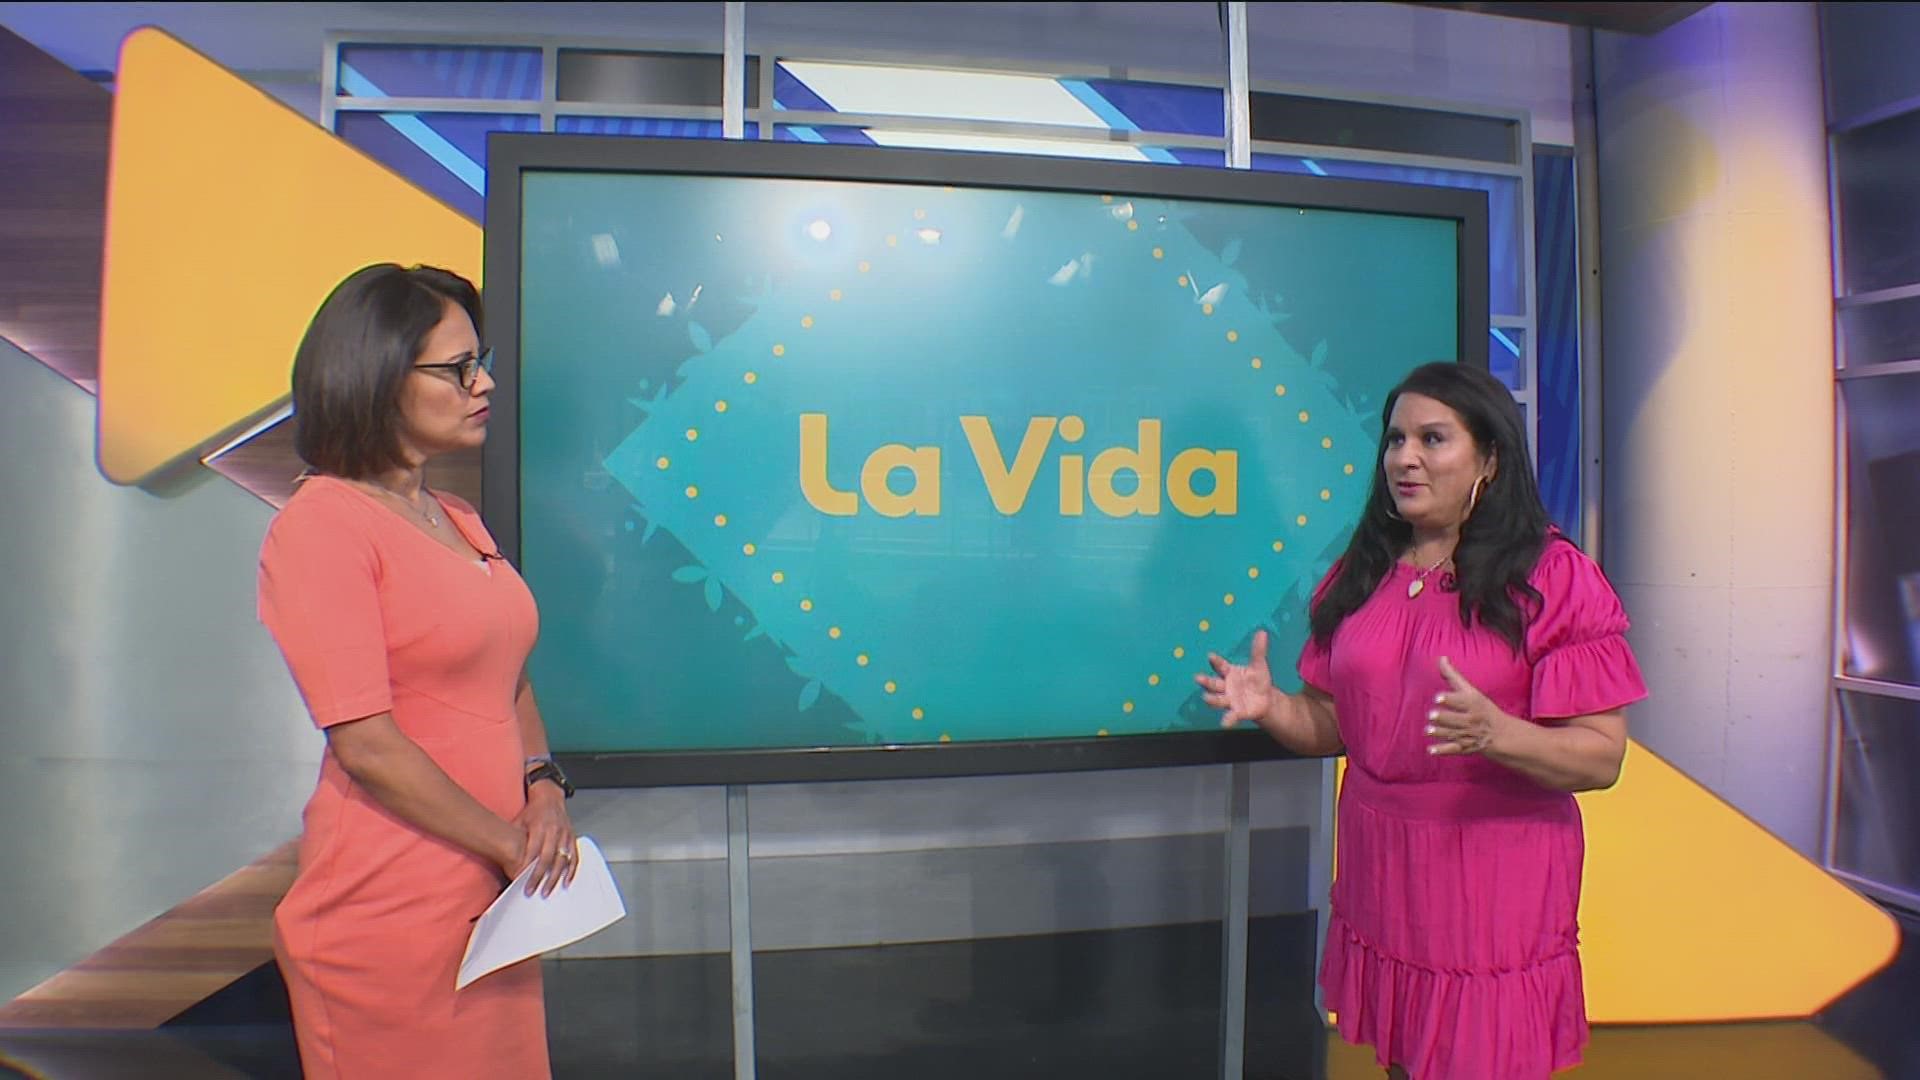 La Vida kicks off on WFAA News at 10 tonight with this story about Little Joe.